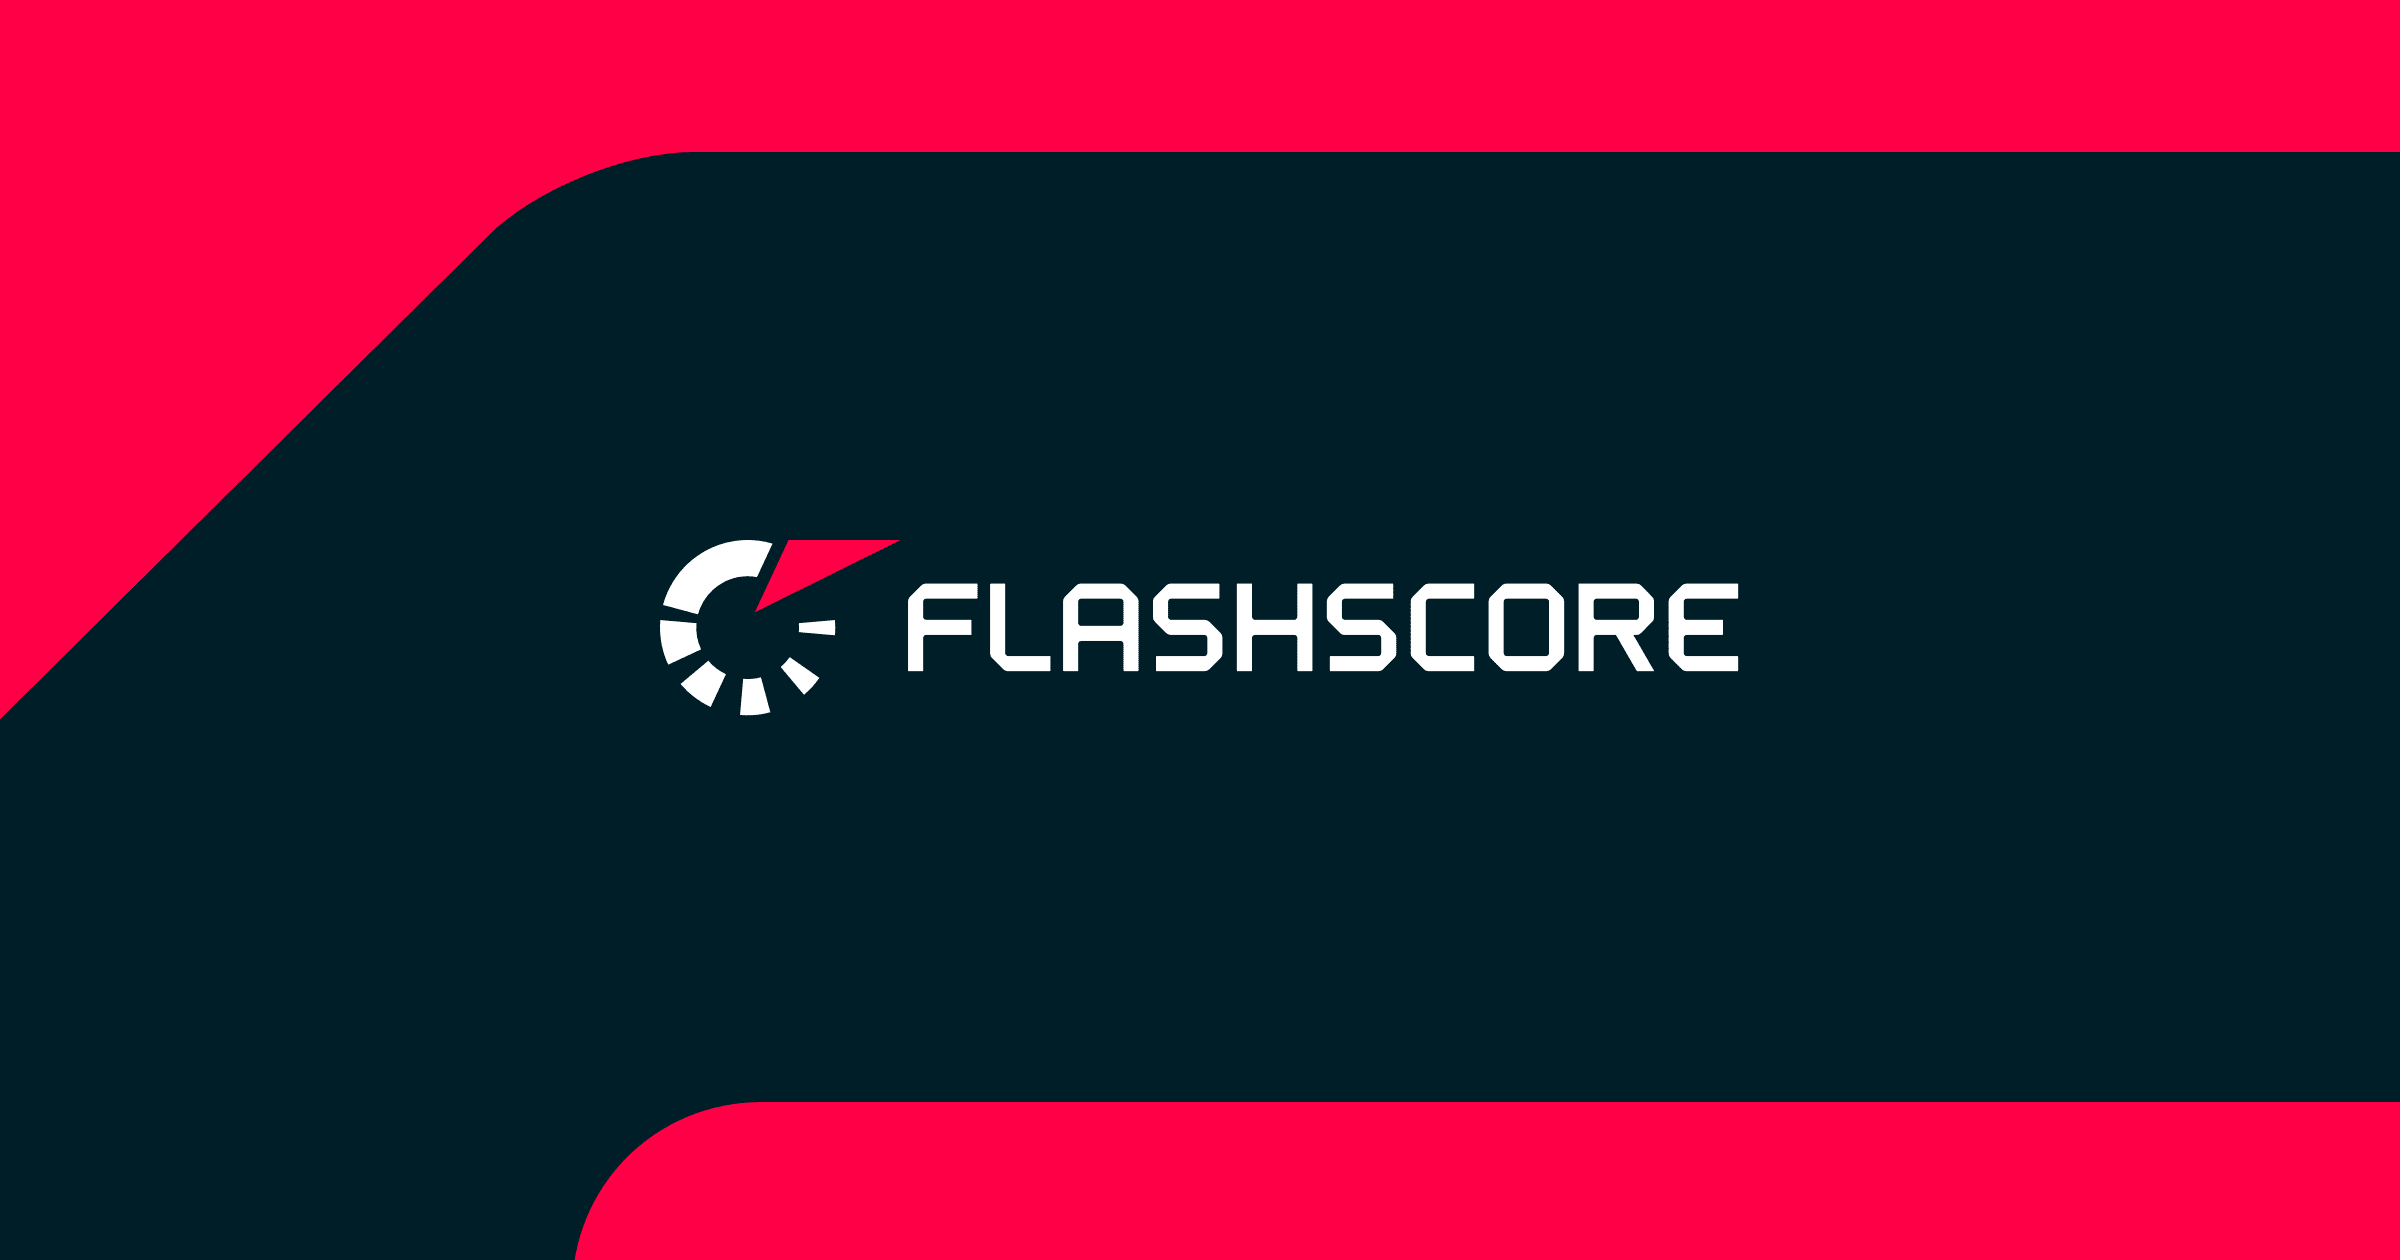 www.flashscore.com